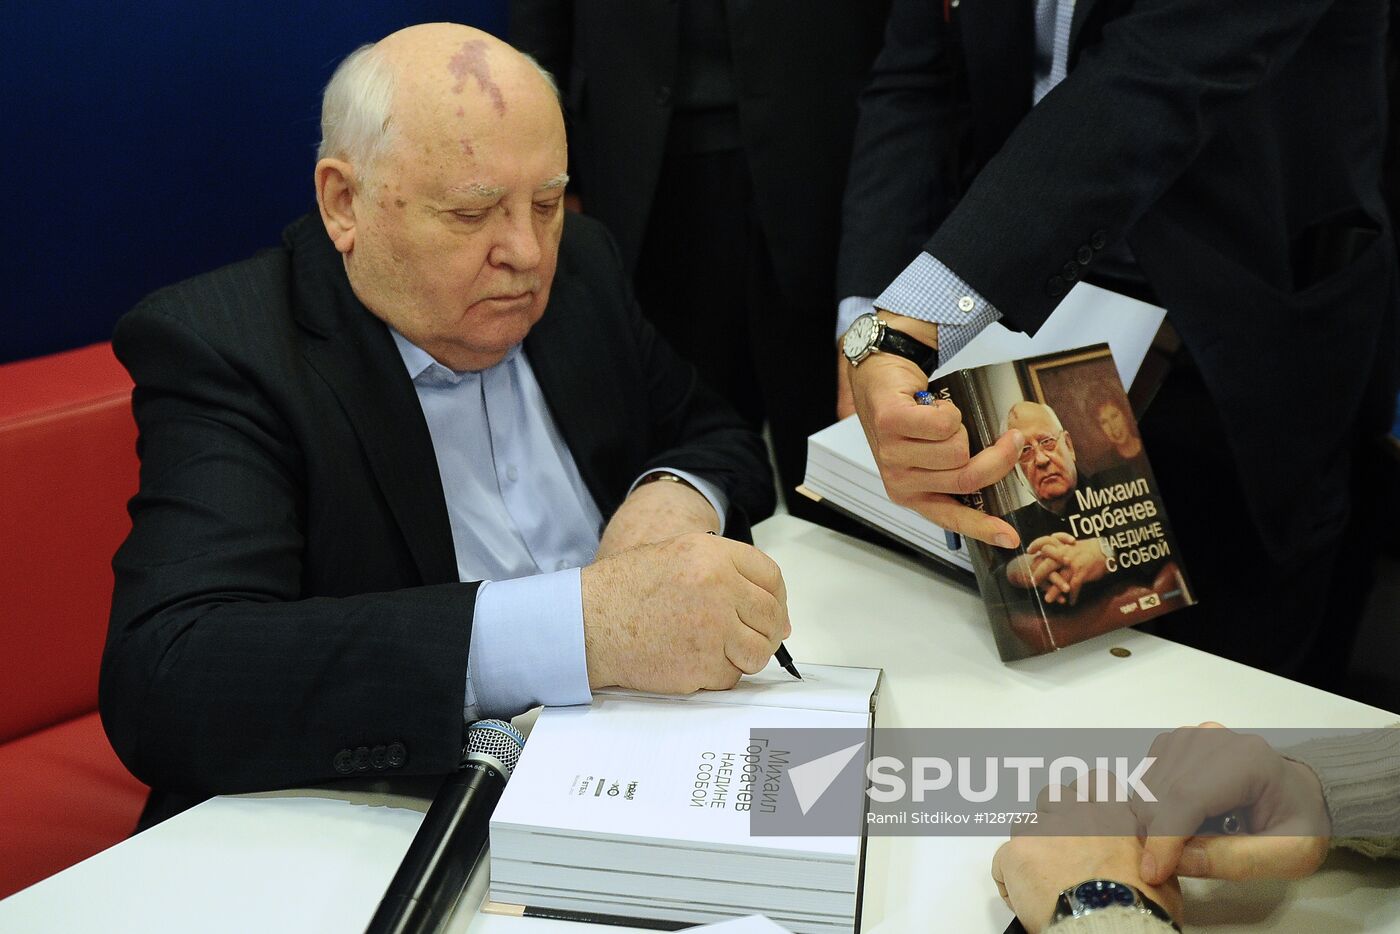 Mikhail Gorbachev presents new book "Alone with Myself"